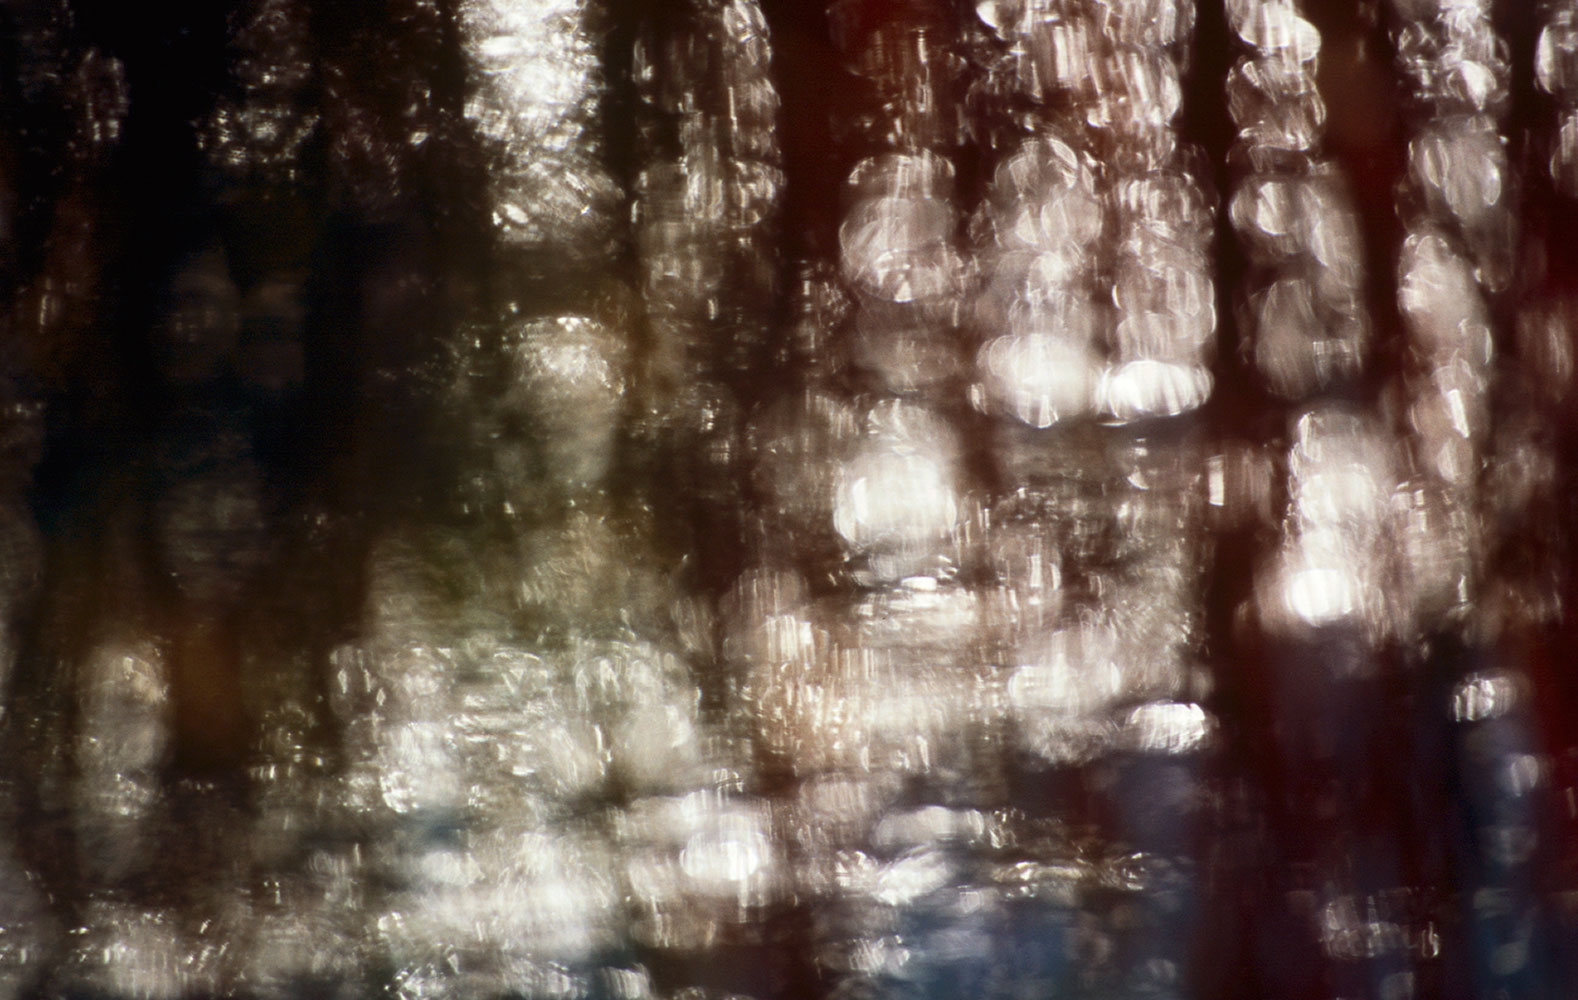 bending-glass:    reflection    memory     pool     meditation mutability    impressionist